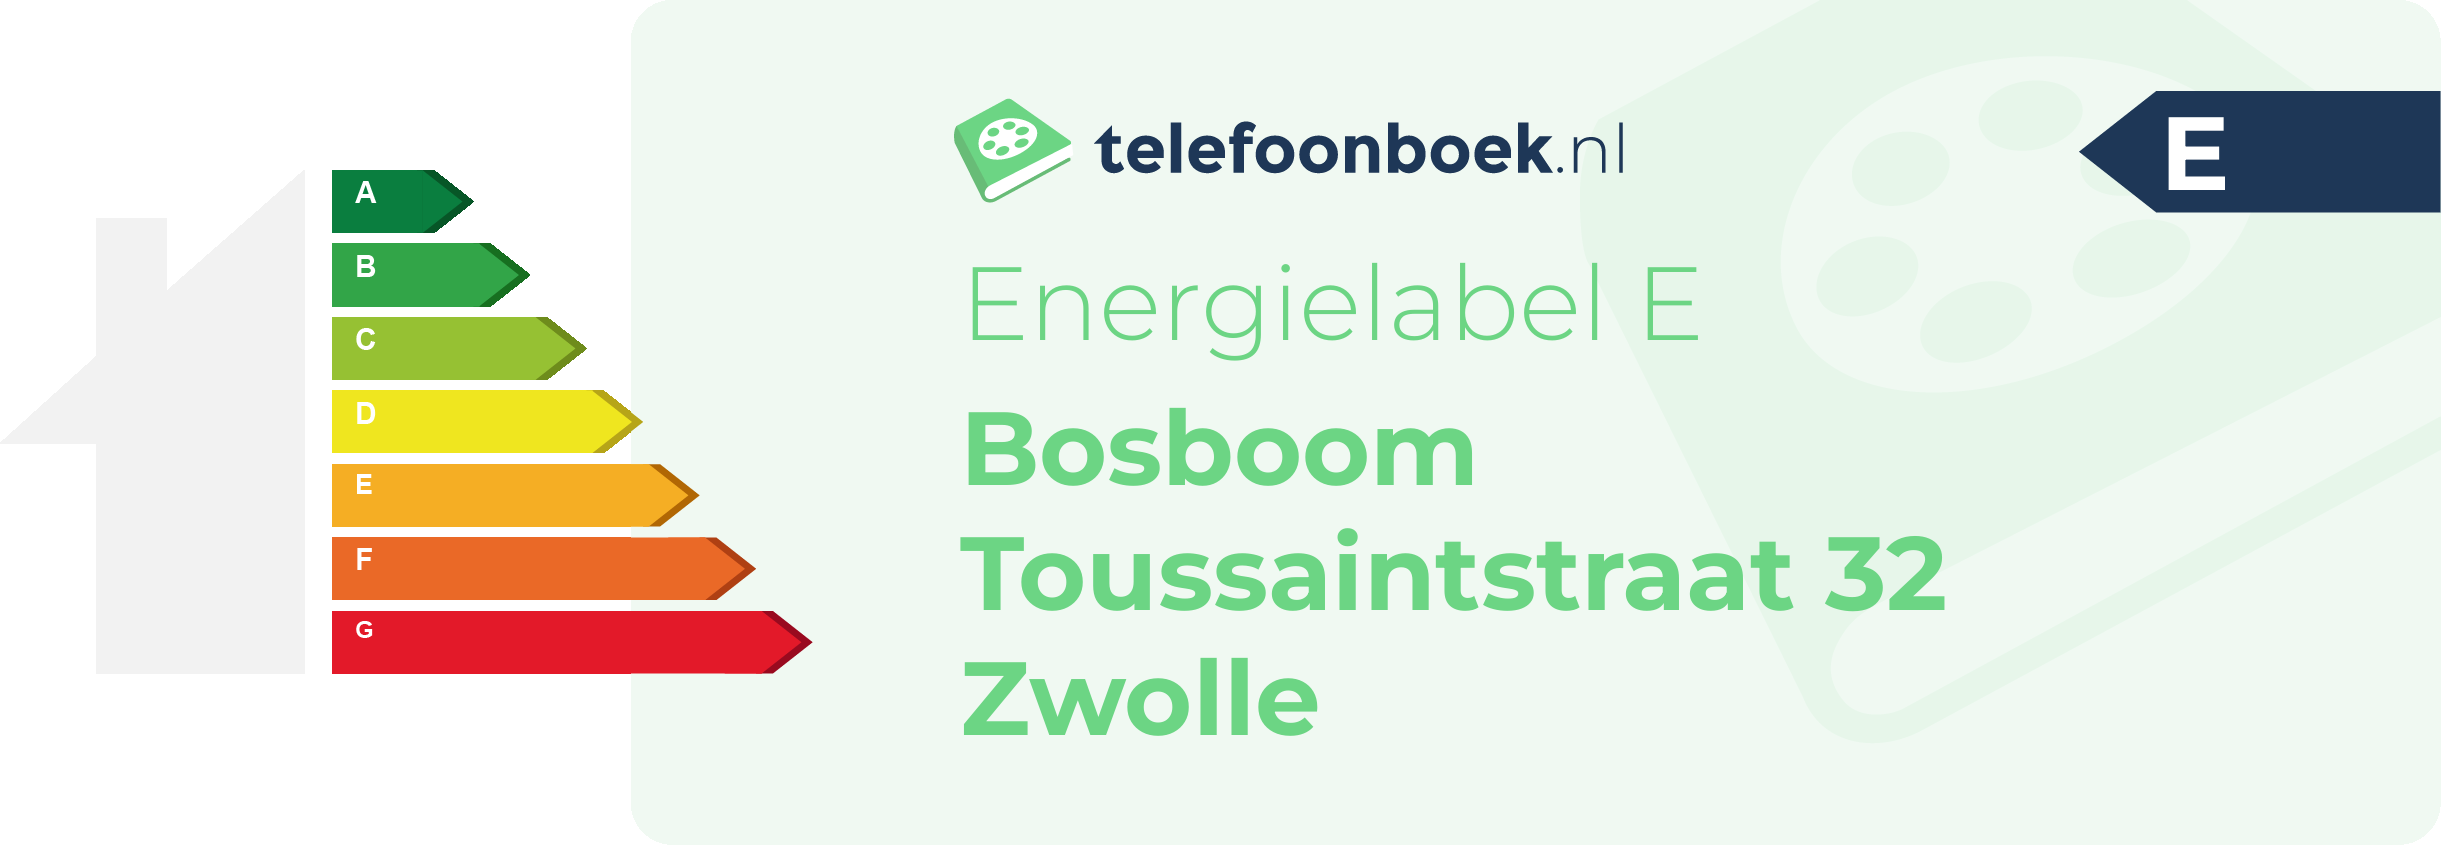 Energielabel Bosboom Toussaintstraat 32 Zwolle